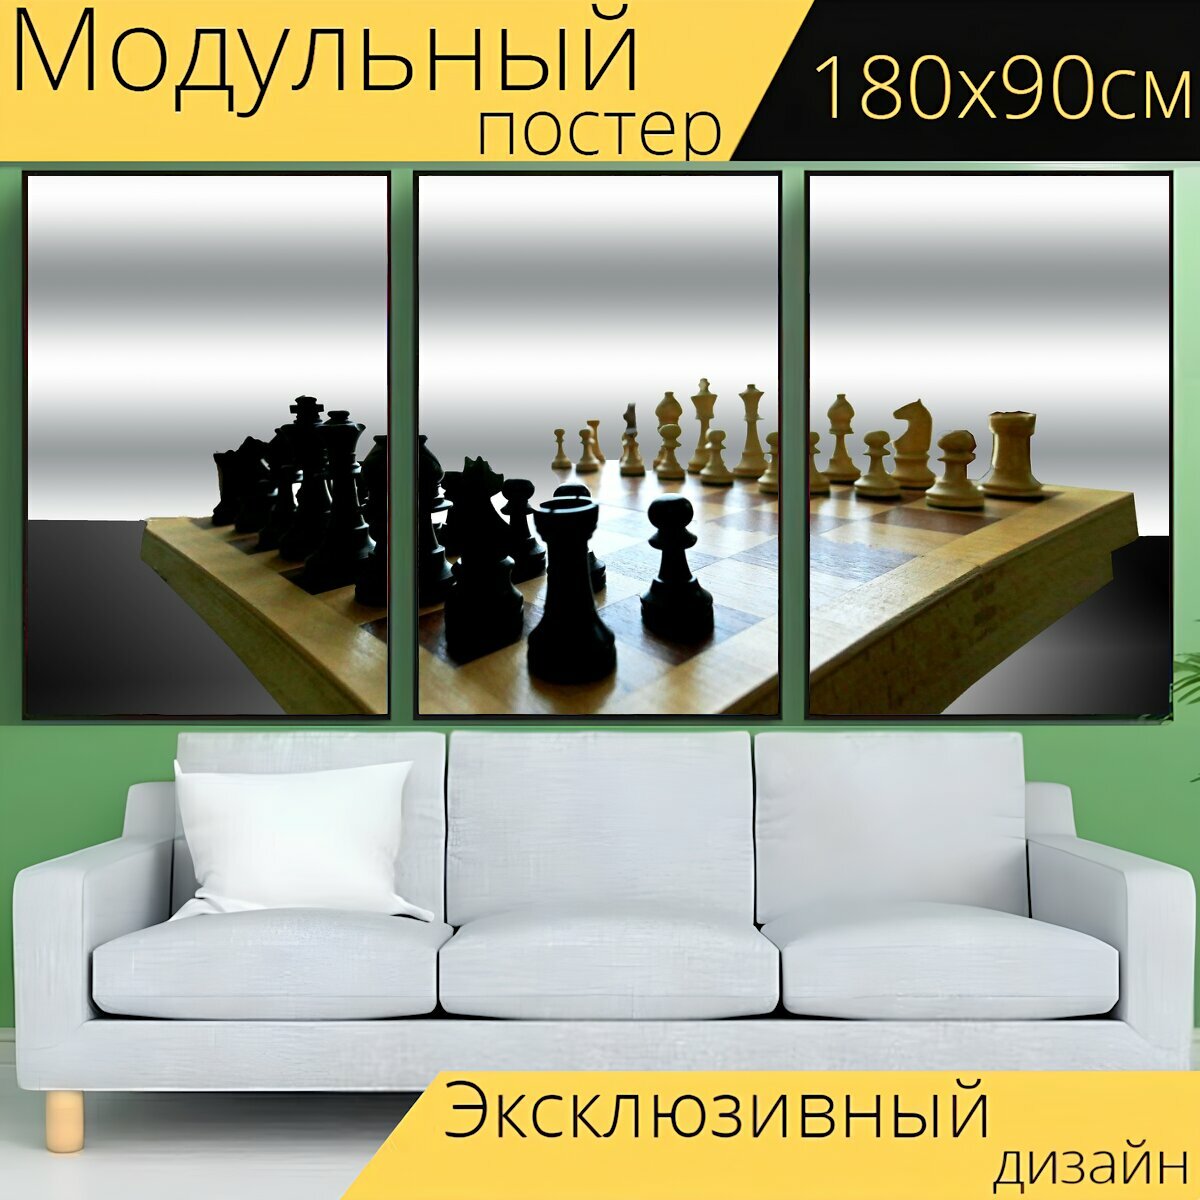 Модульный постер "Шахматы, шахматная доска, шахматные фигуры" 180 x 90 см. для интерьера